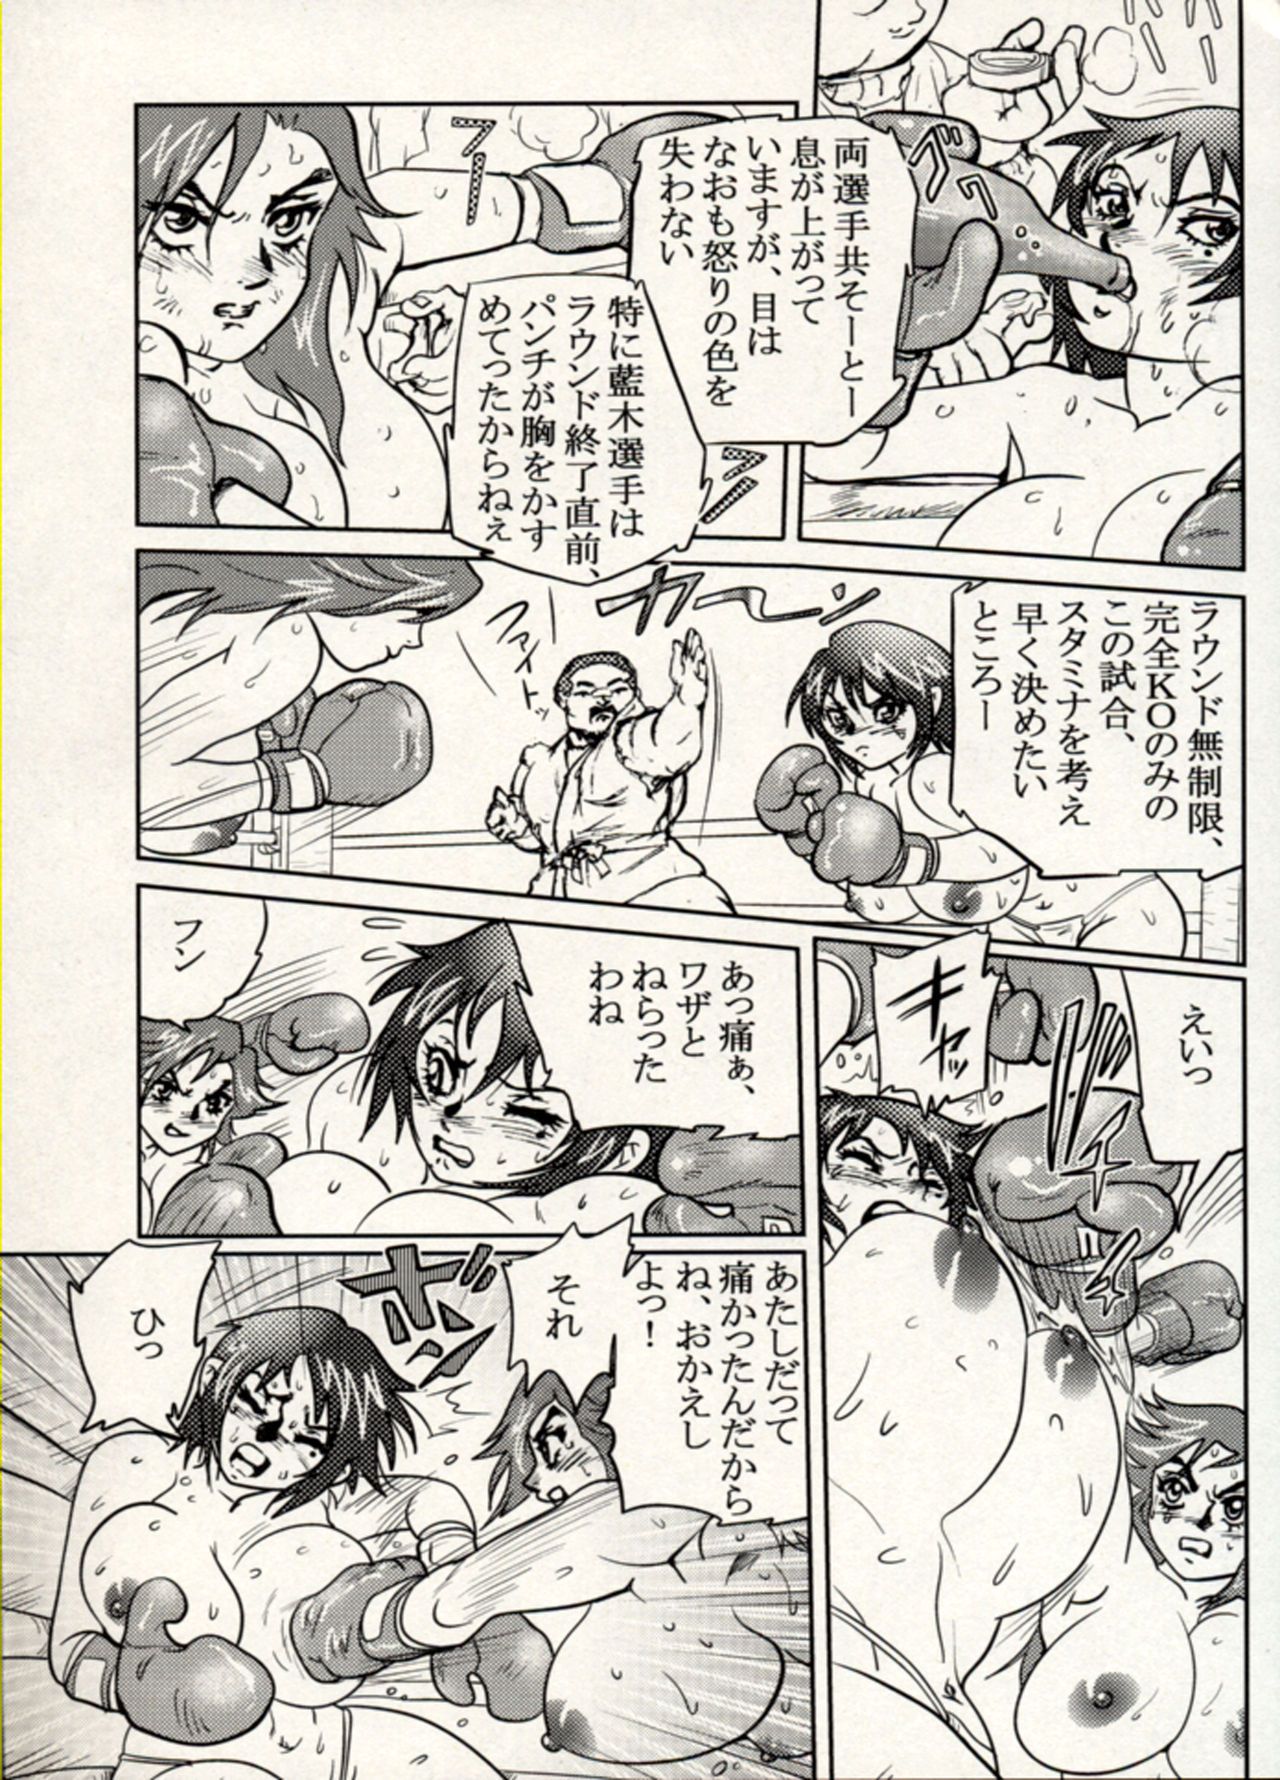 Manga Battle Volume 15 29